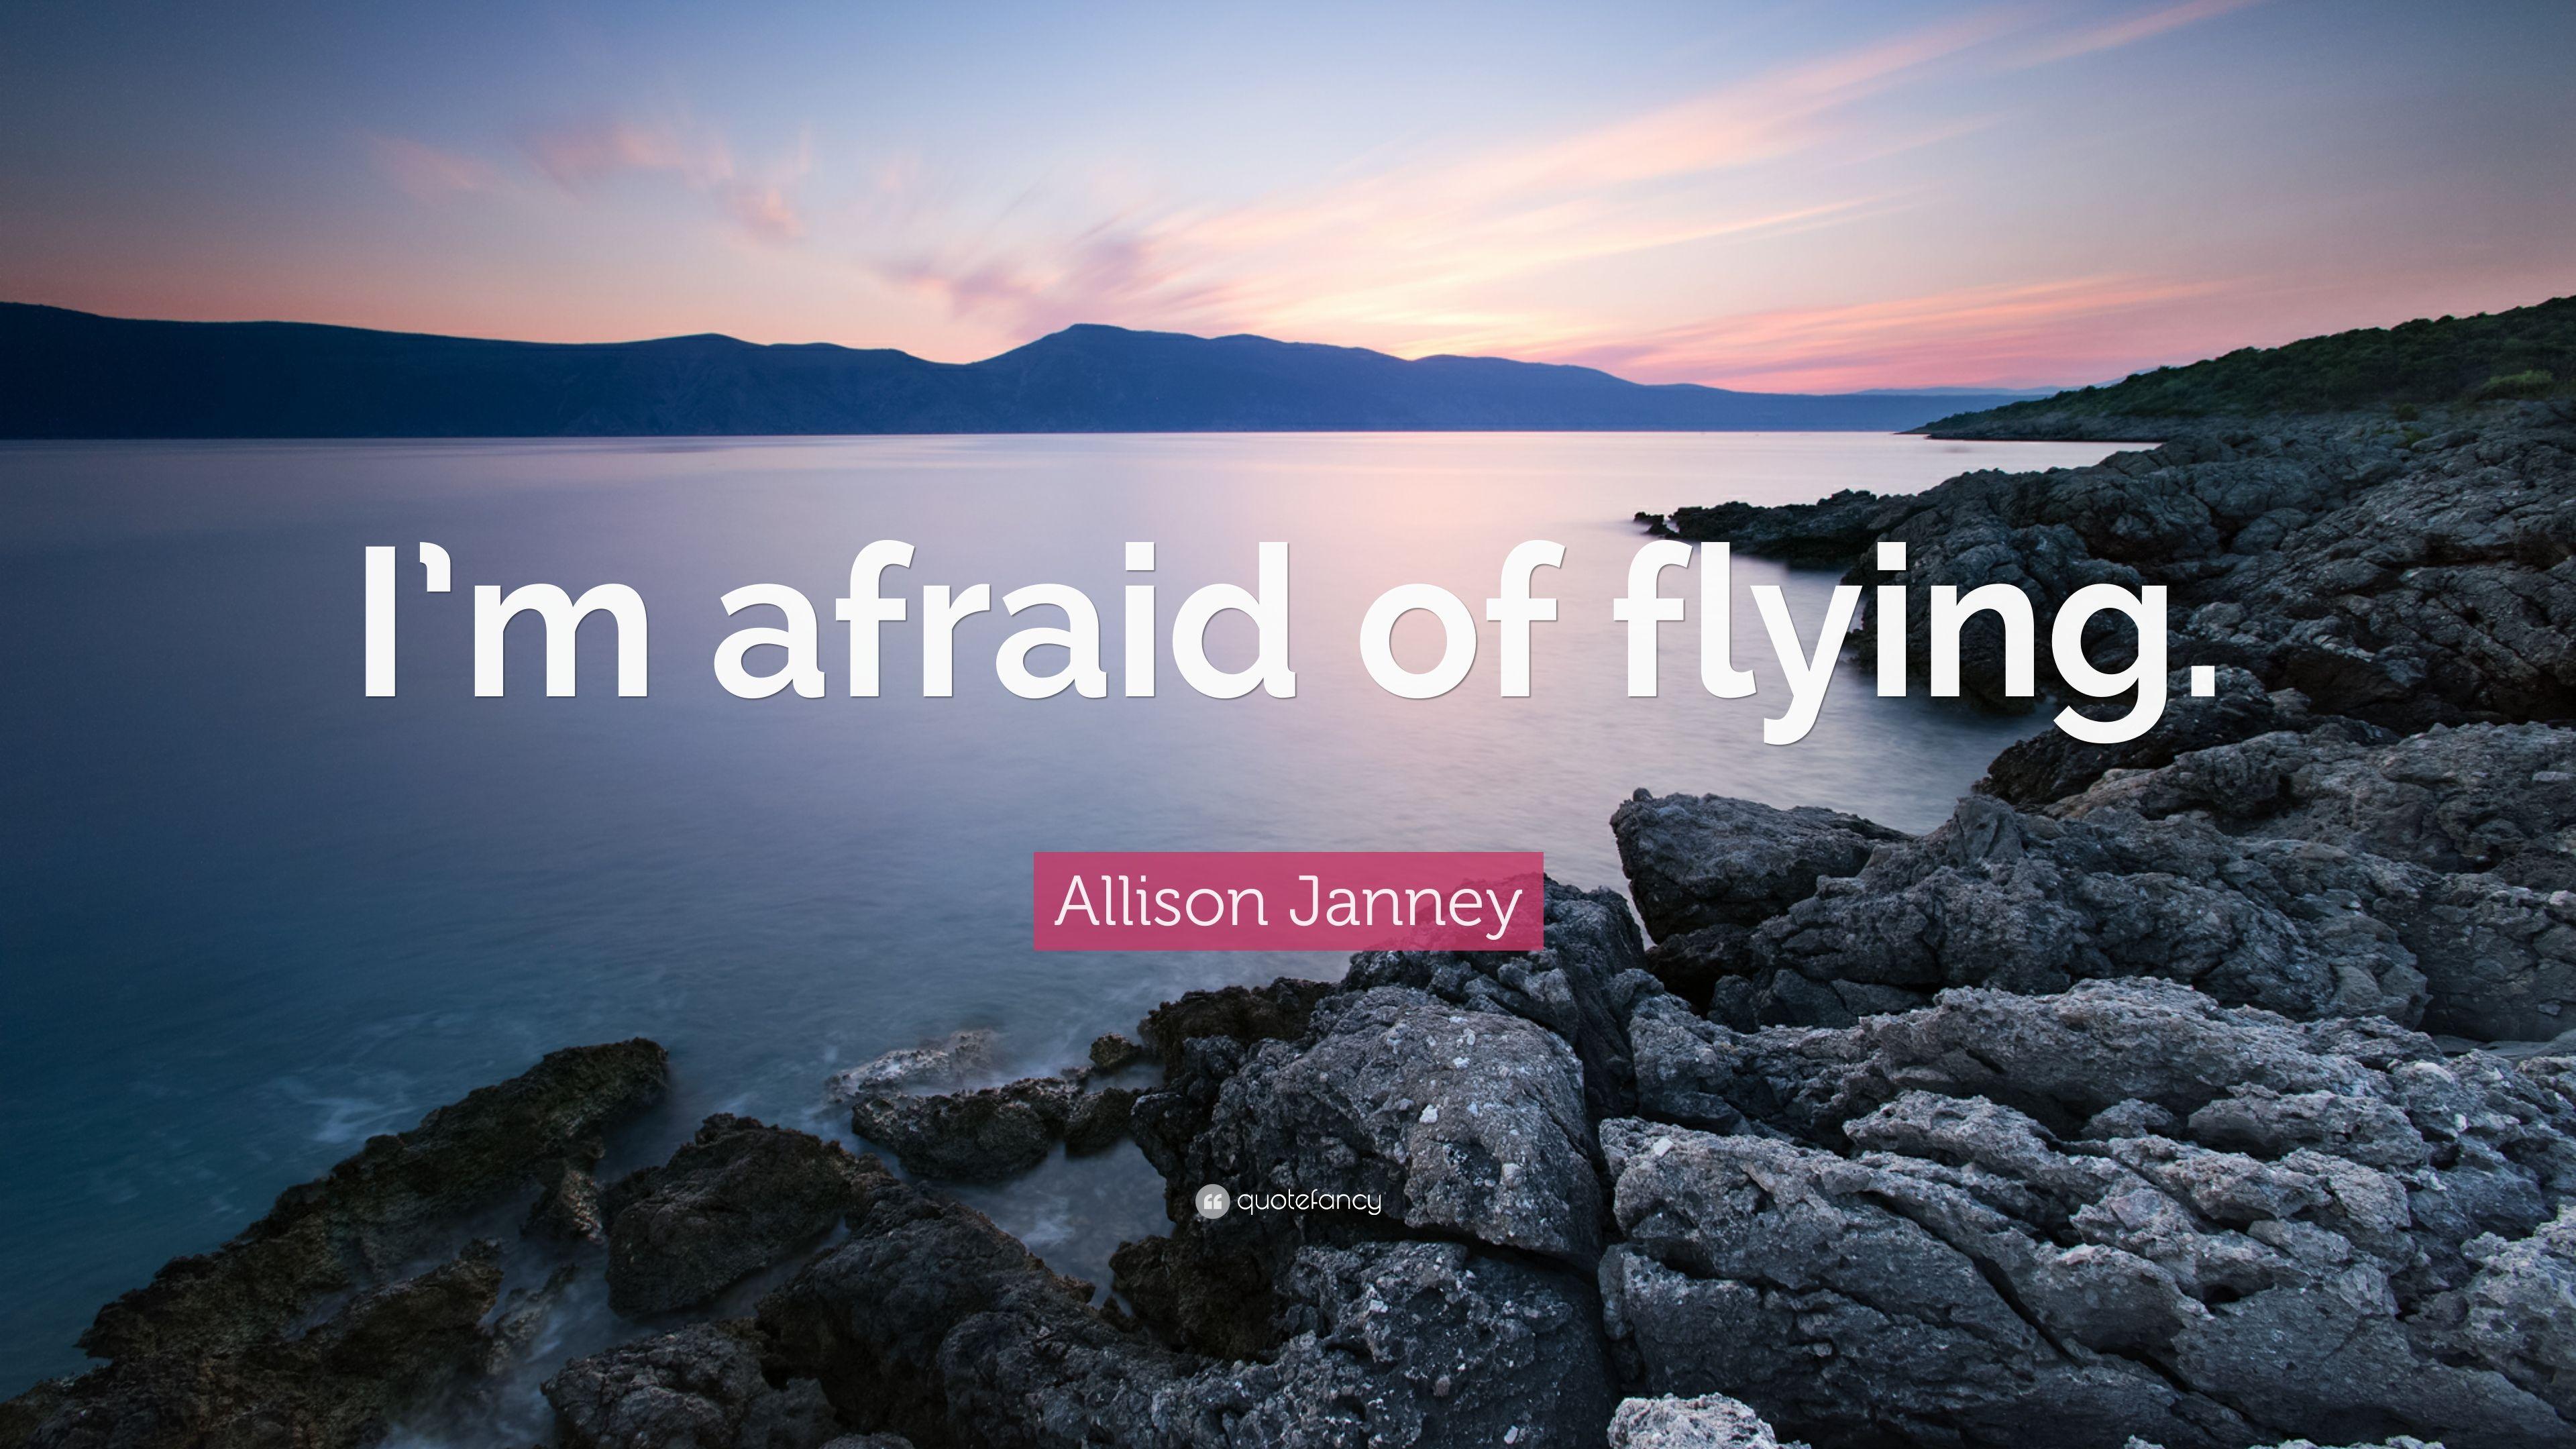 Allison Janney Quote: “I'm afraid of flying.” 9 wallpaper